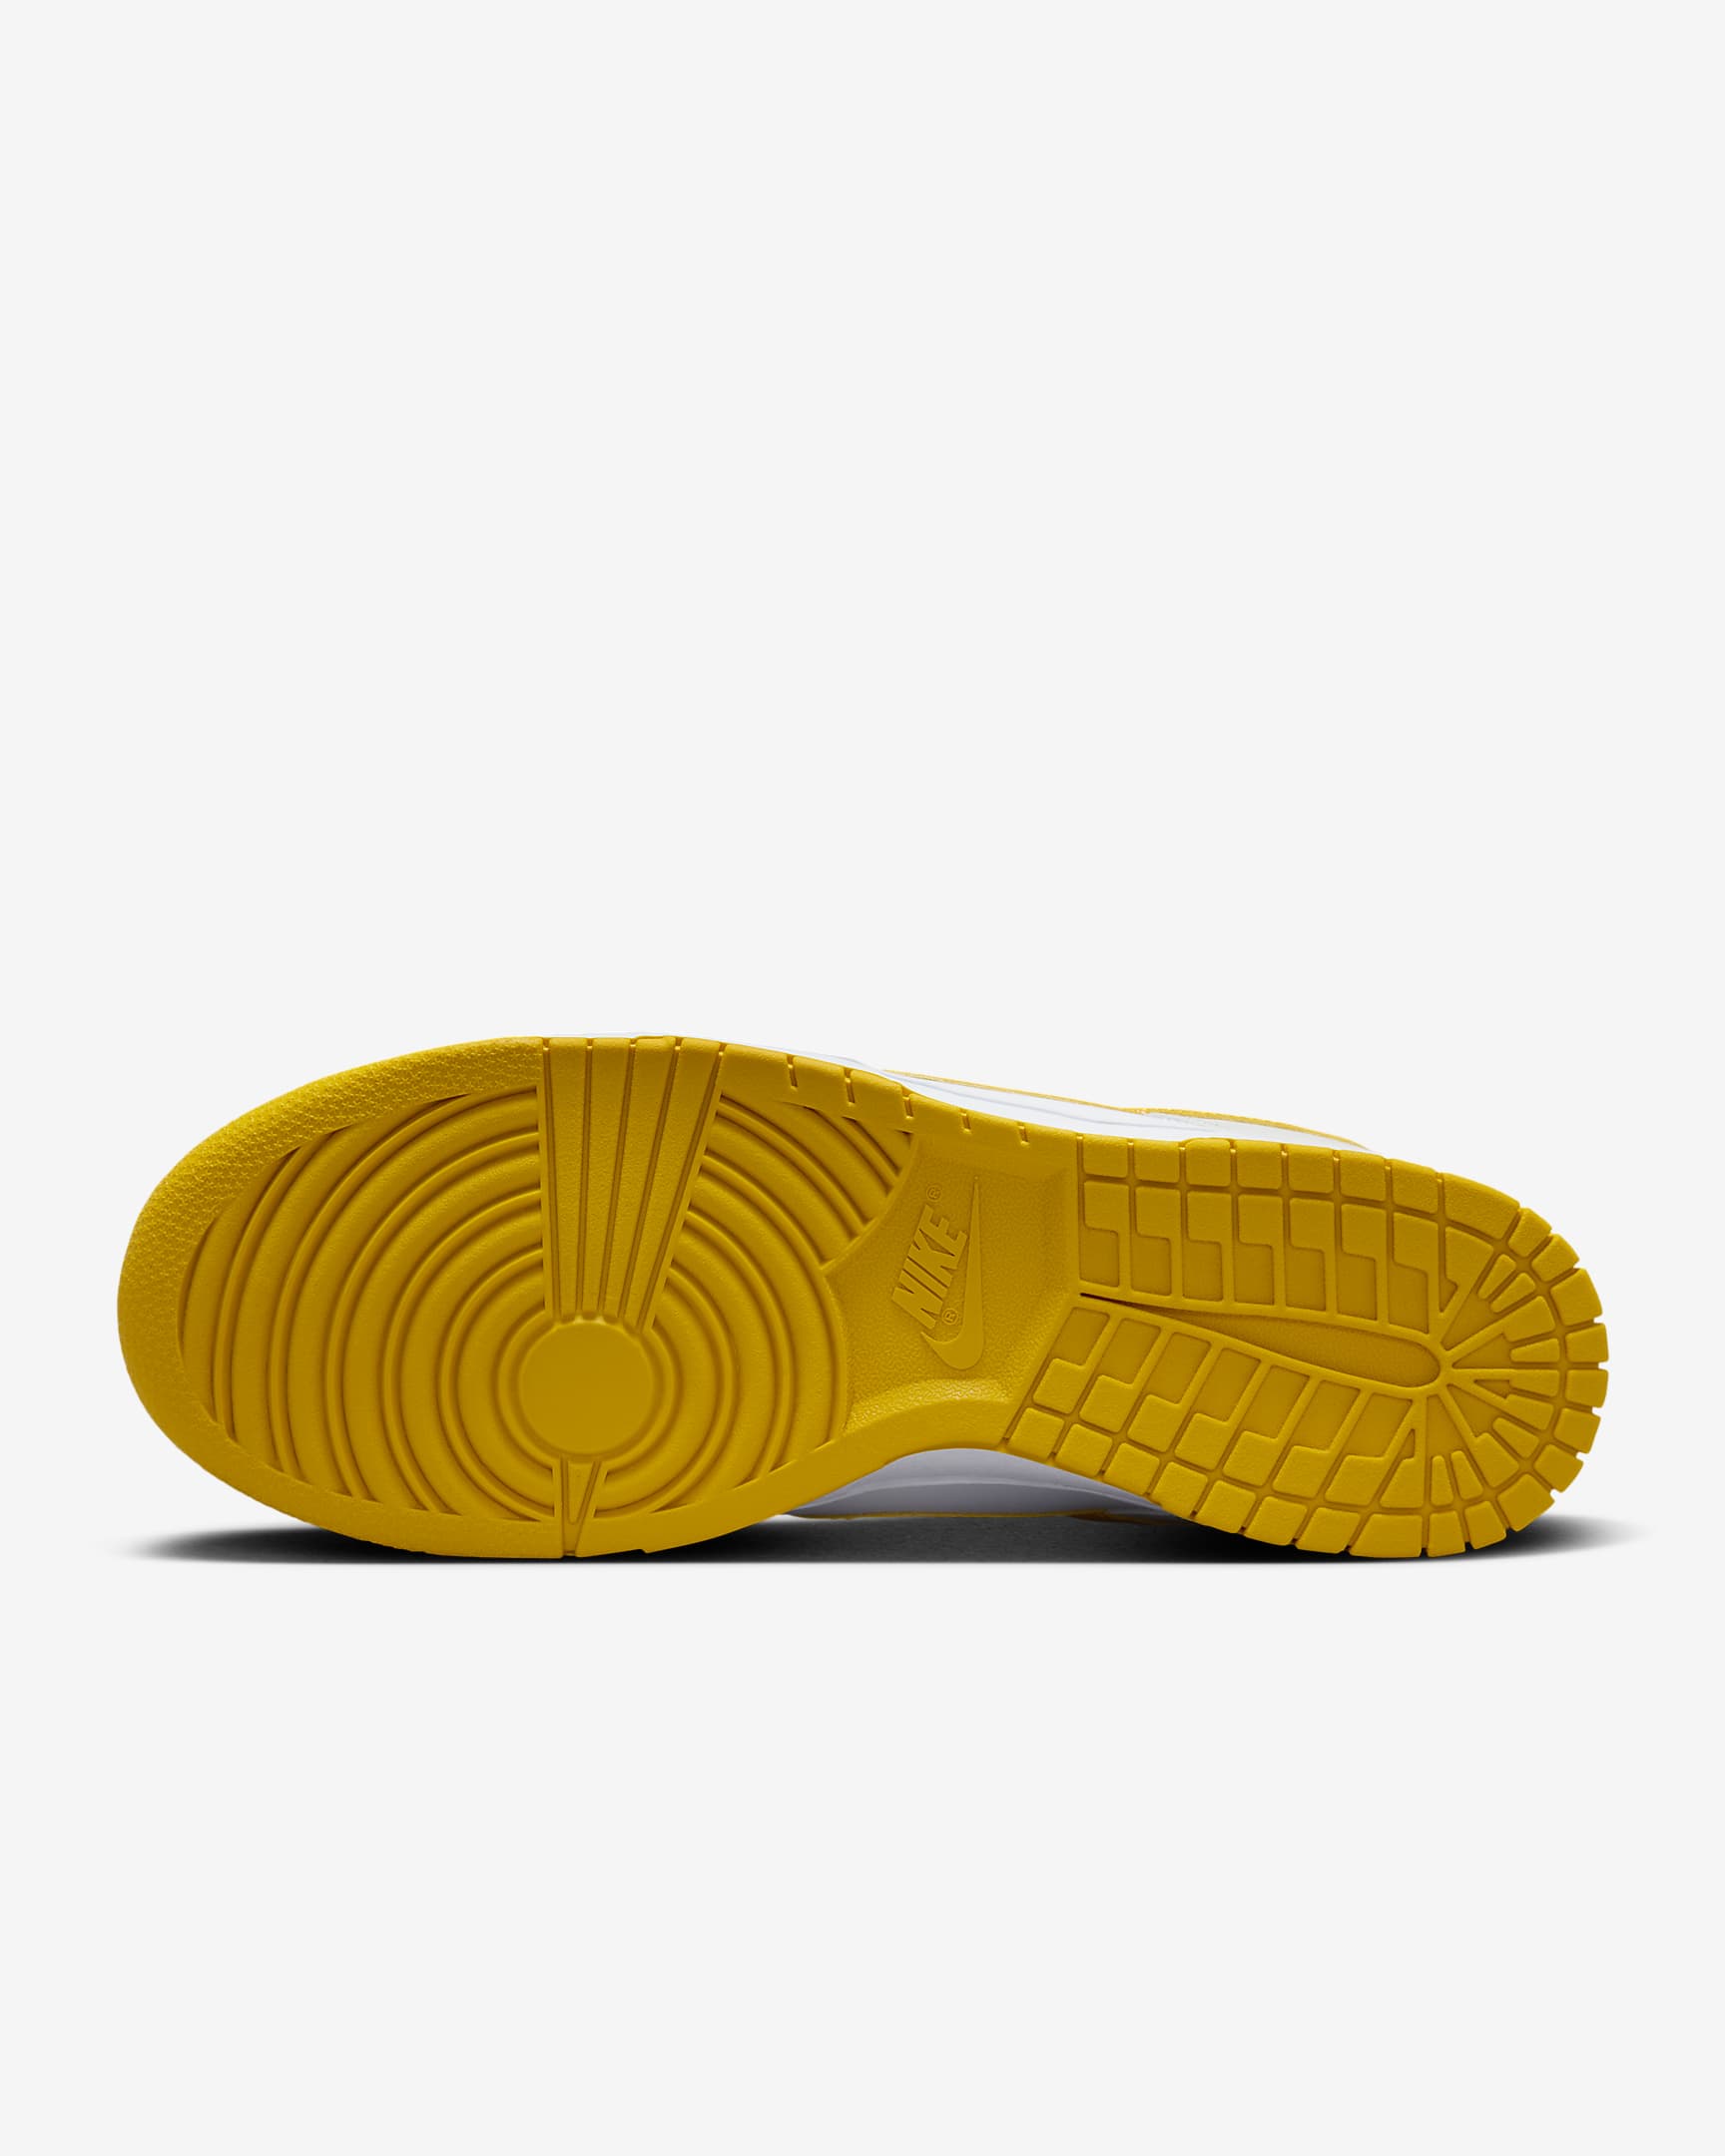 Nike Dunk Low Retro Men's Shoes - White/Summit White/University Gold